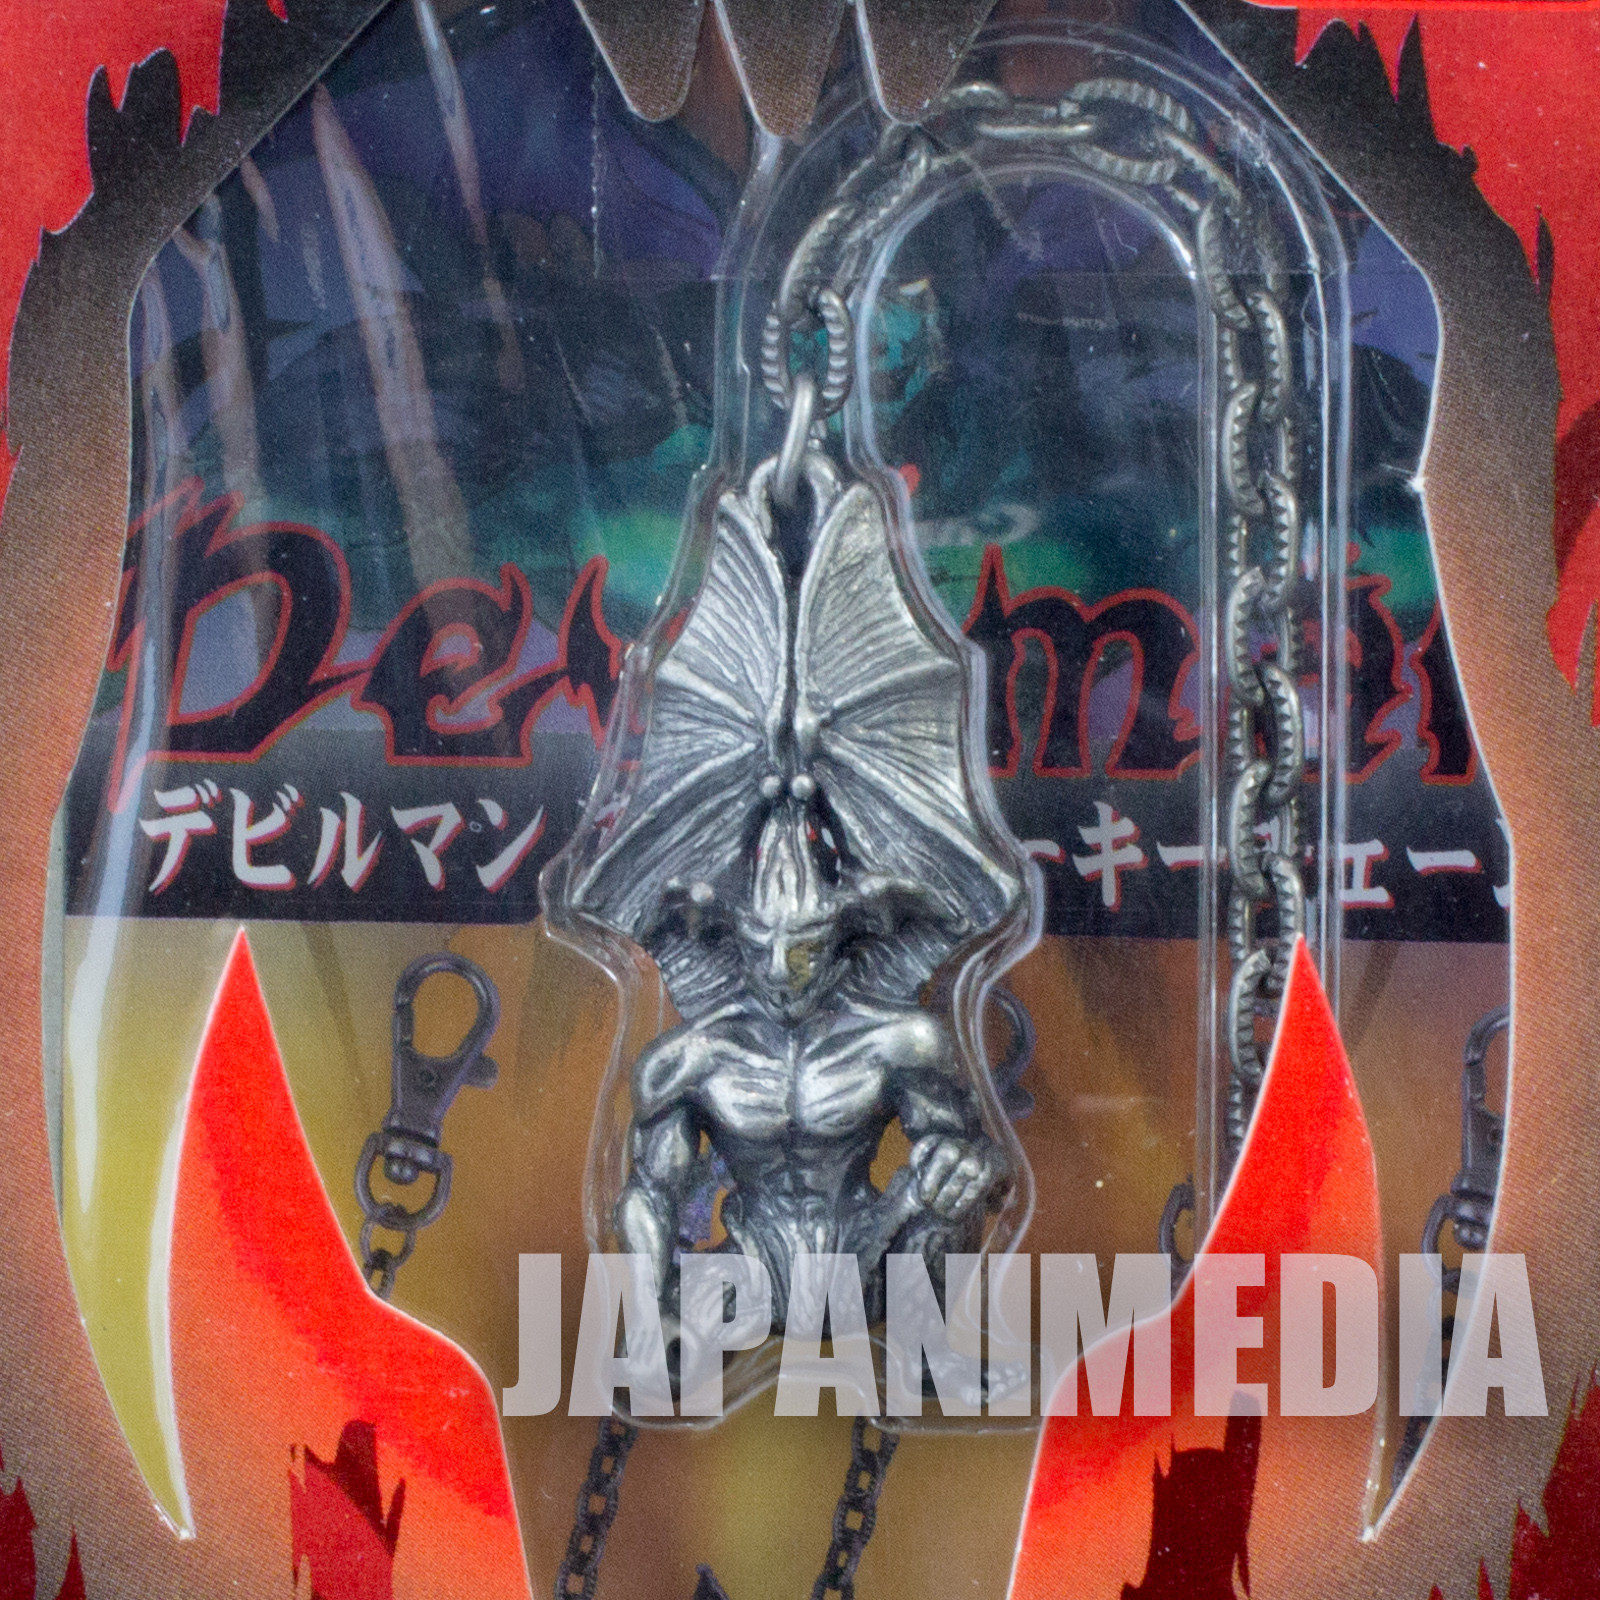 Devilman Metal Figure Keychain #5 Go Nagai Banpresto JAPAN ANIME MANGA